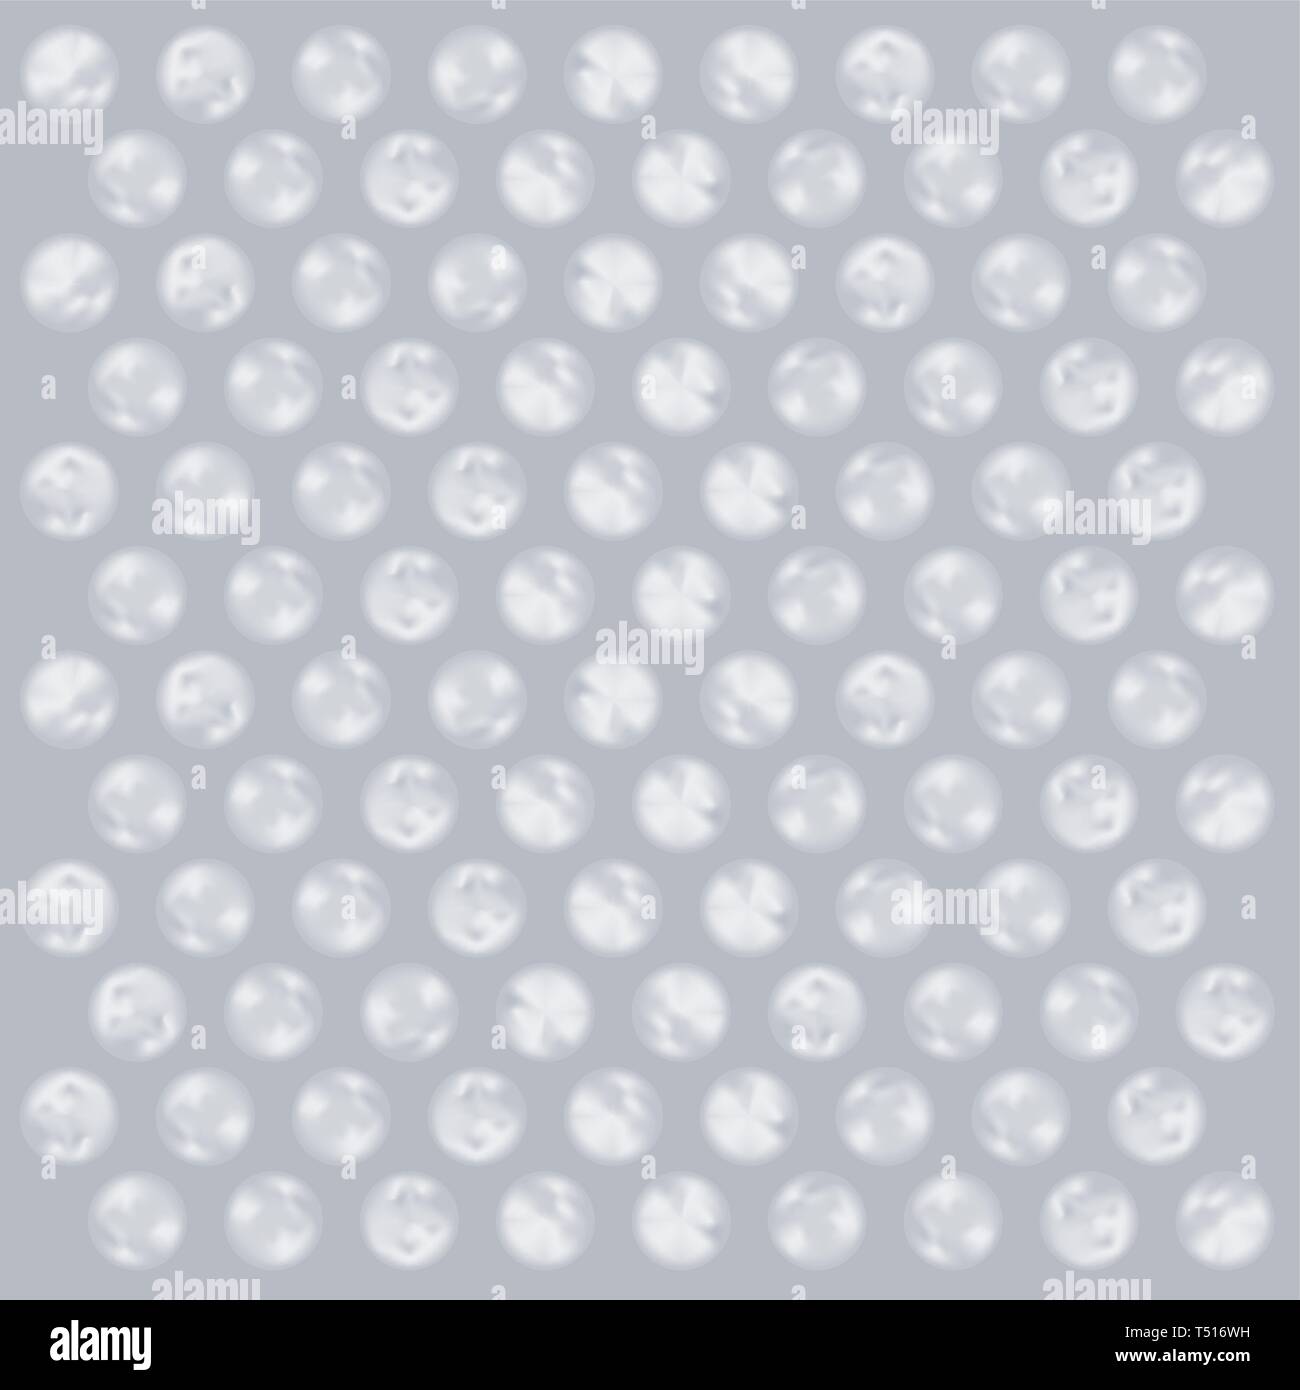 Bubble Wrap Texture Vector Stock Illustration - Download Image Now